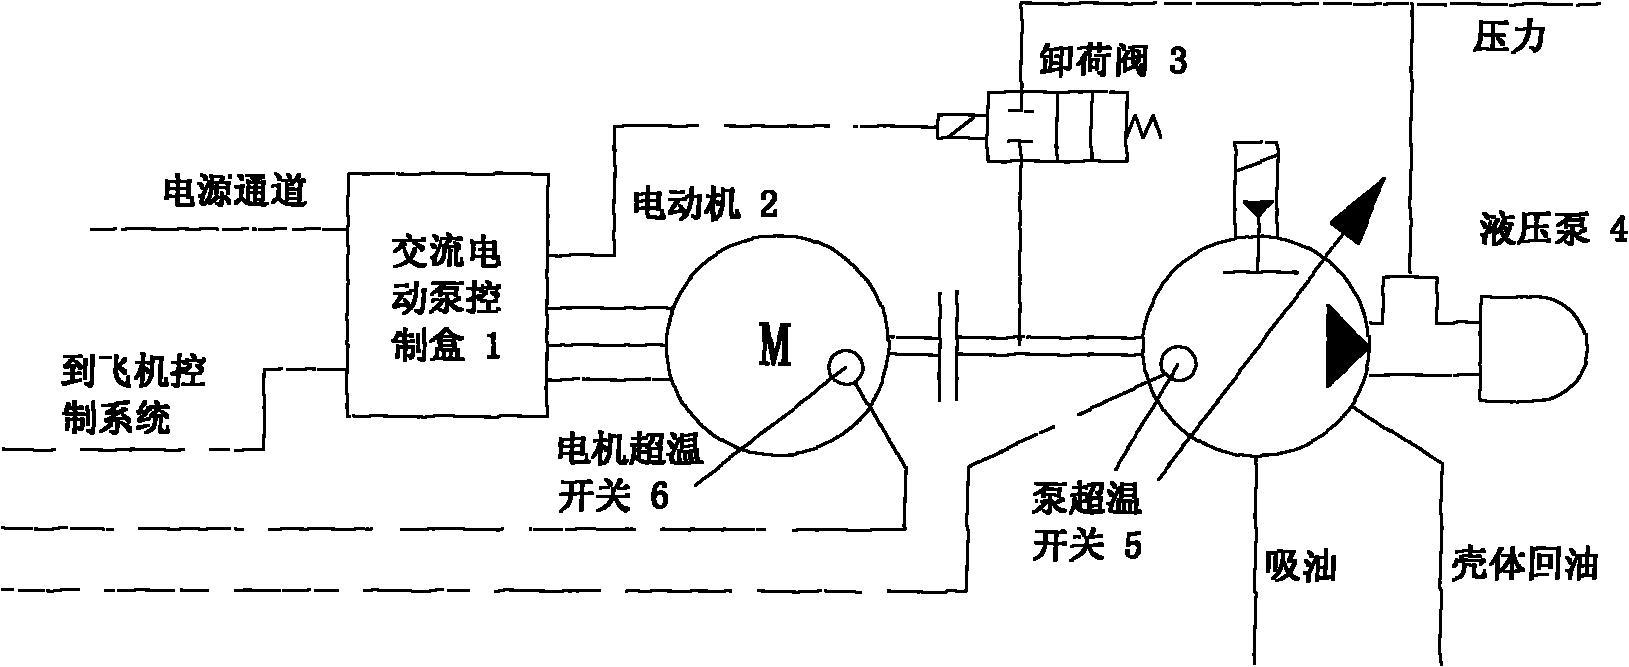 Comprehensive control method for alternating-current electric pump